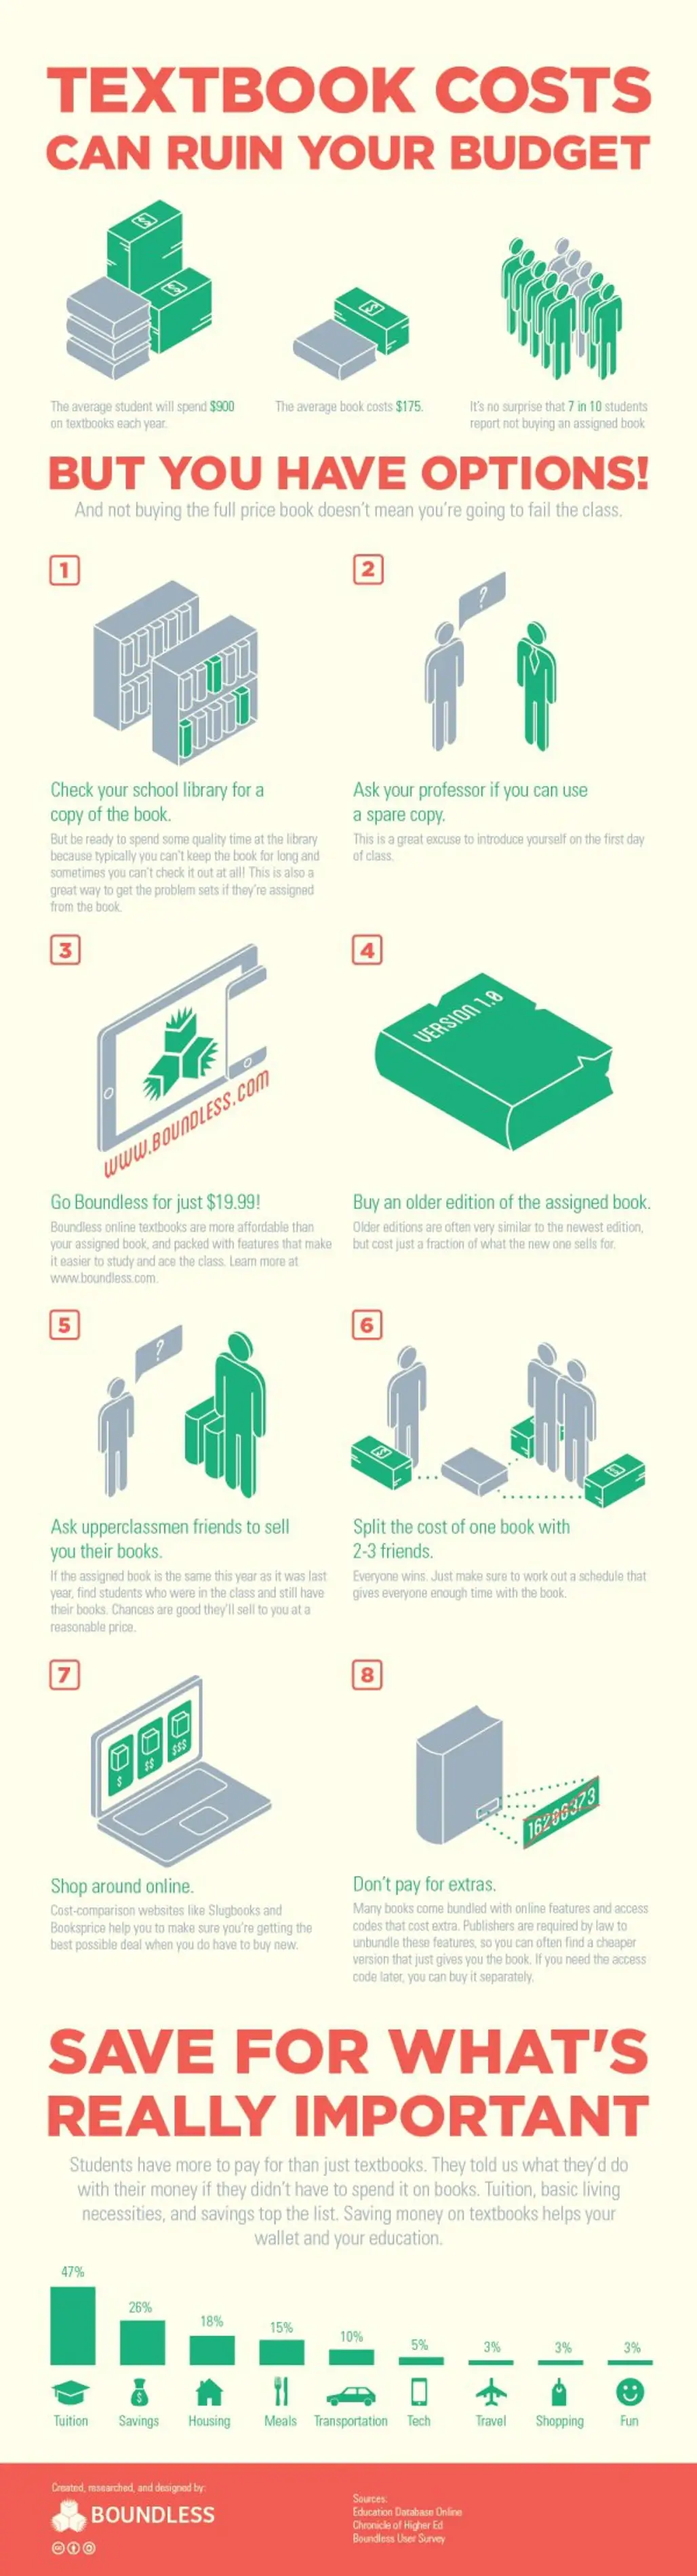 8 Ways to save Money on Textbooks